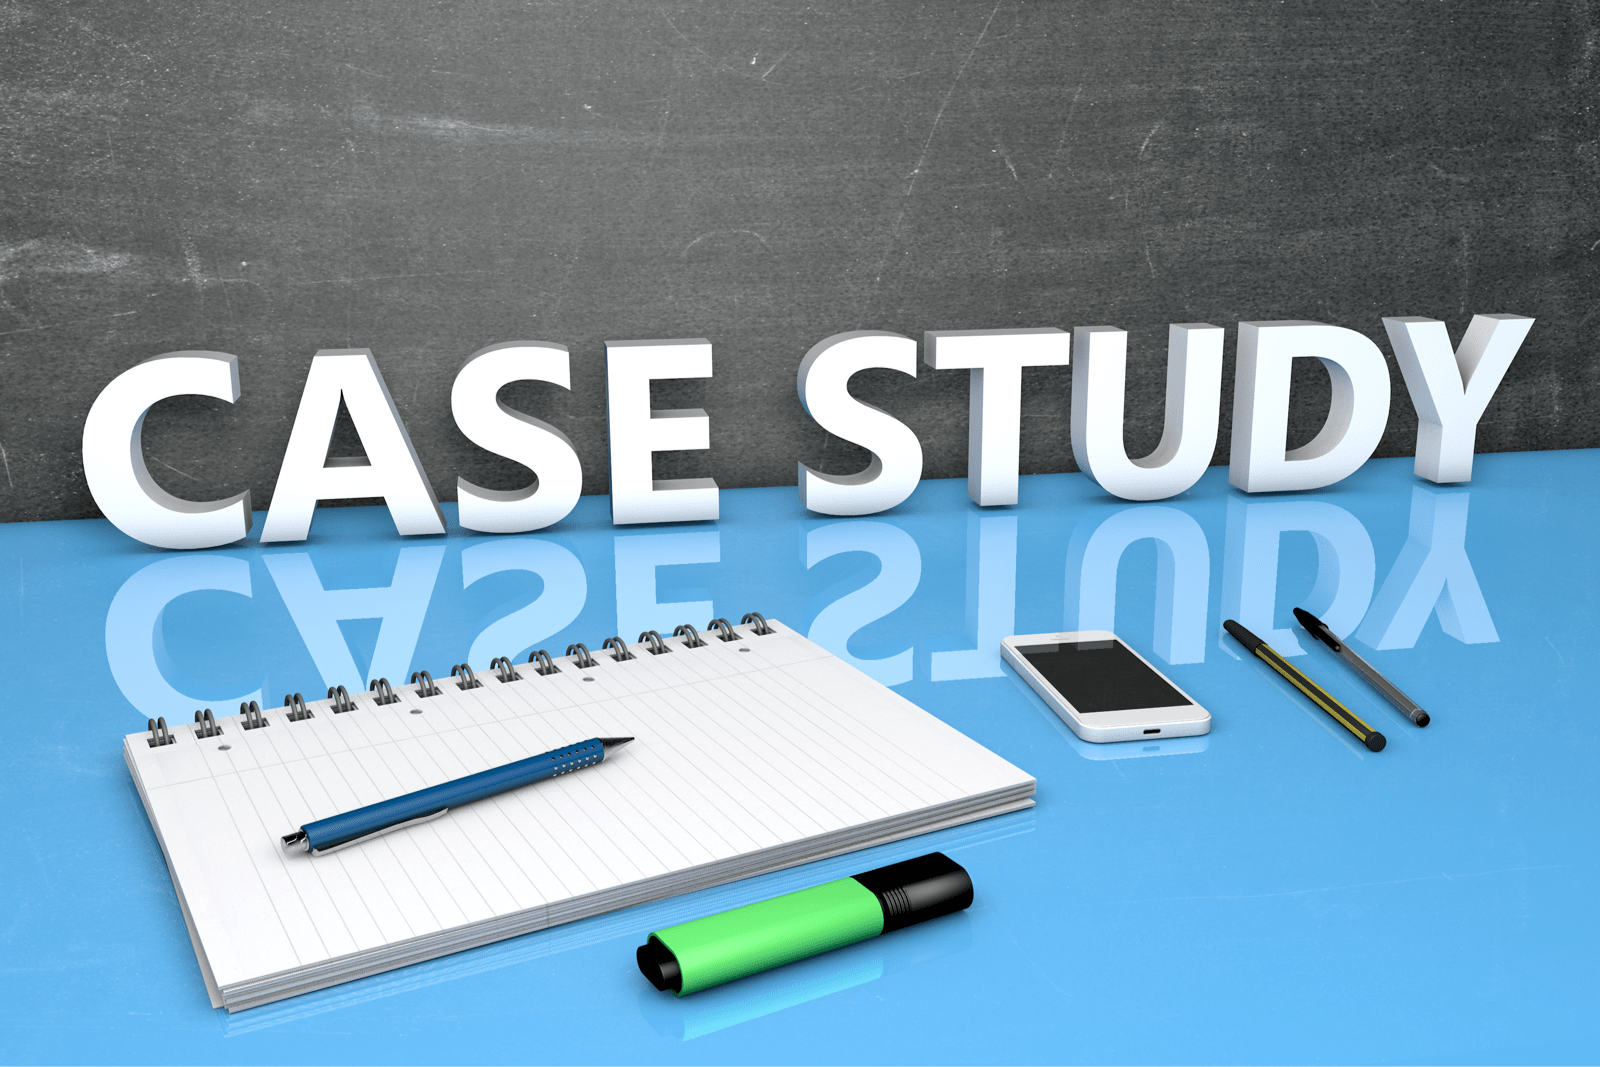 CASE STUDYという立体的なテキストと、ノートやペン、スマートフォン